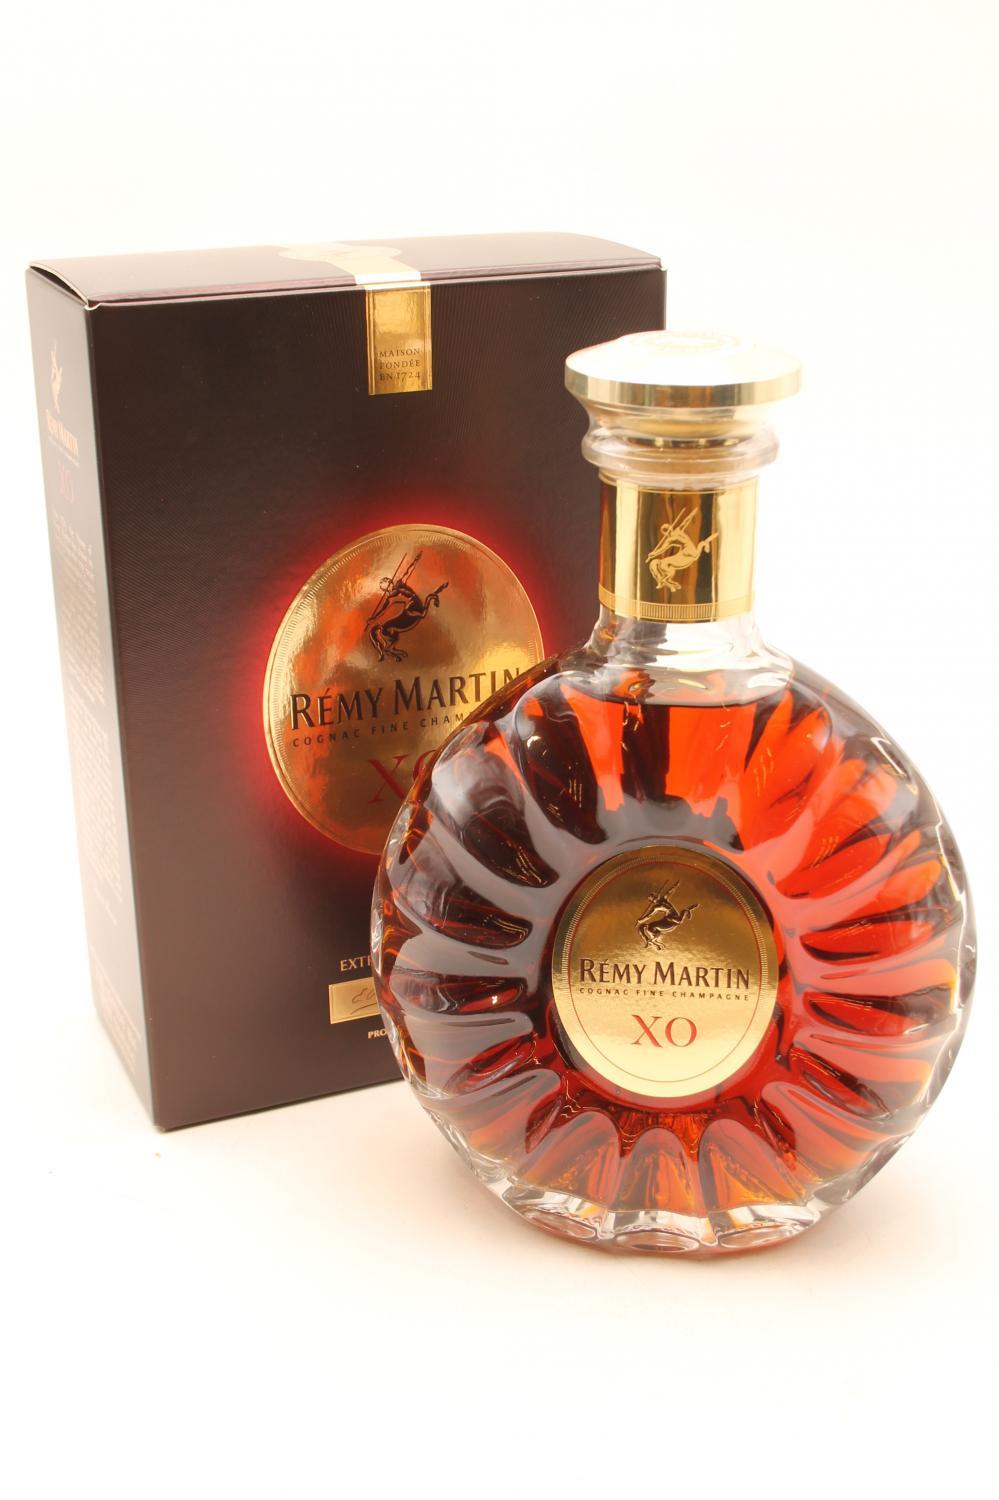 1) Remy Martin X.O. Premier Cru Grande Champagne Cognac, 40% ABV